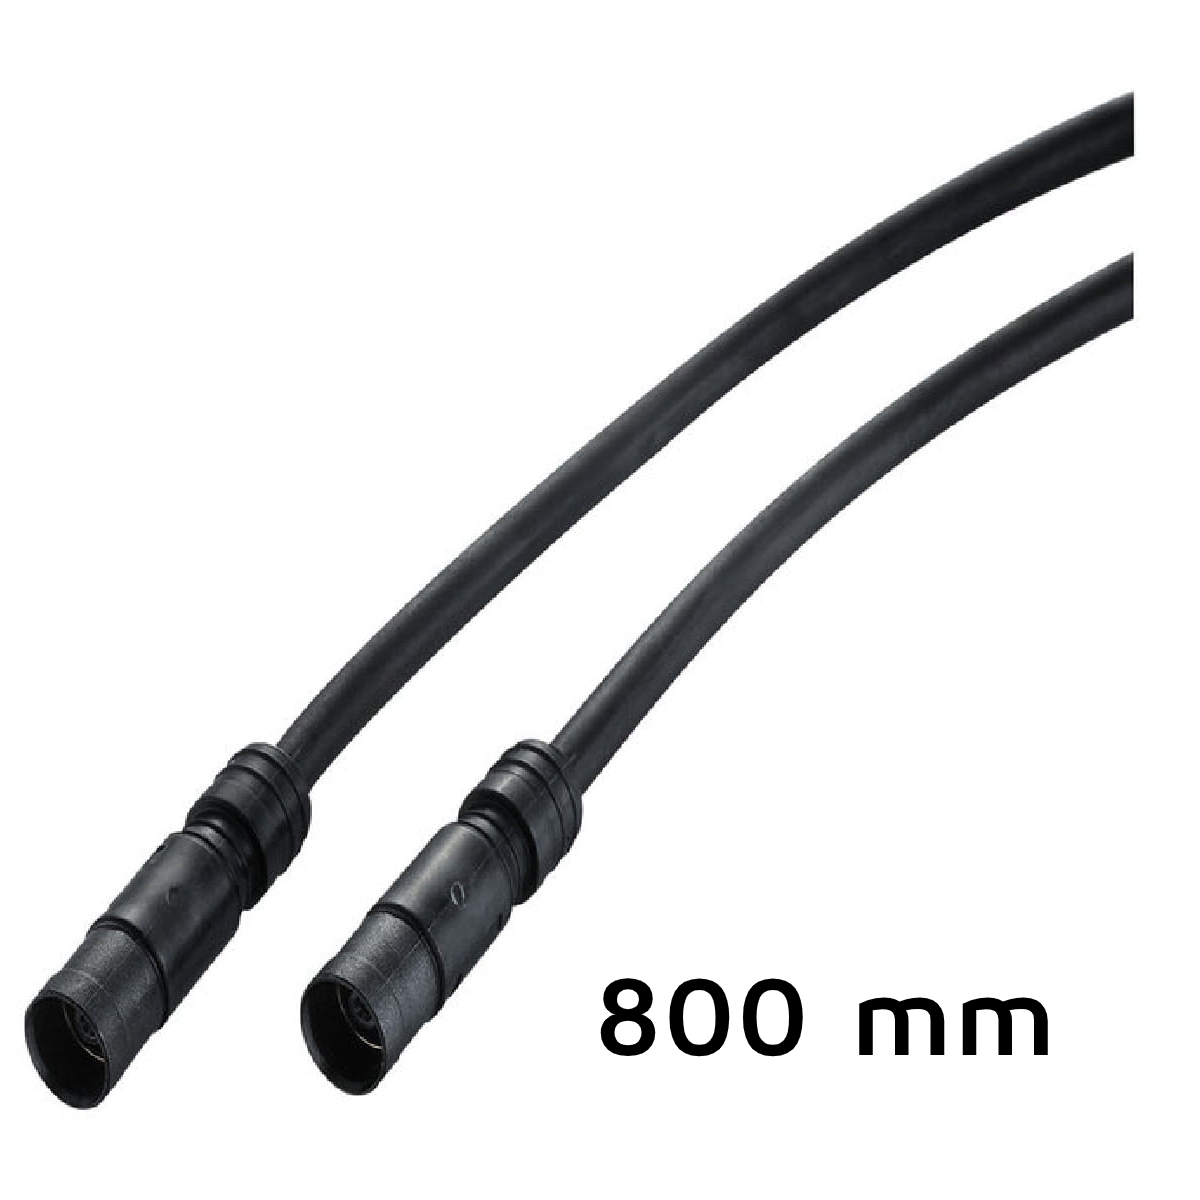 Shimano DI2 Electric Cable - 800mm